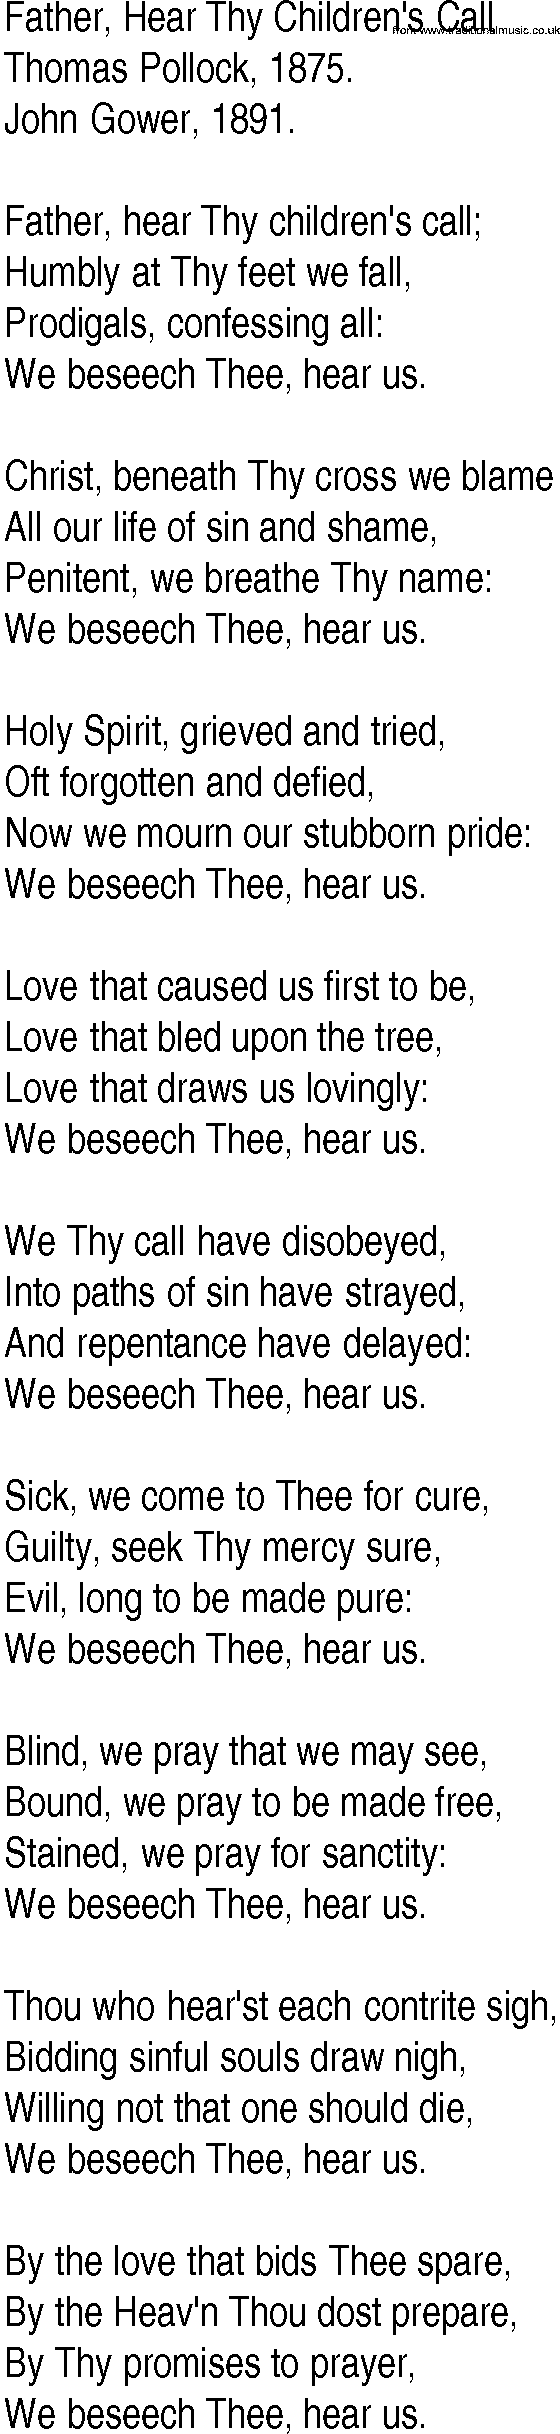 Hymn and Gospel Song: Father, Hear Thy Children's Call by Thomas Pollock lyrics